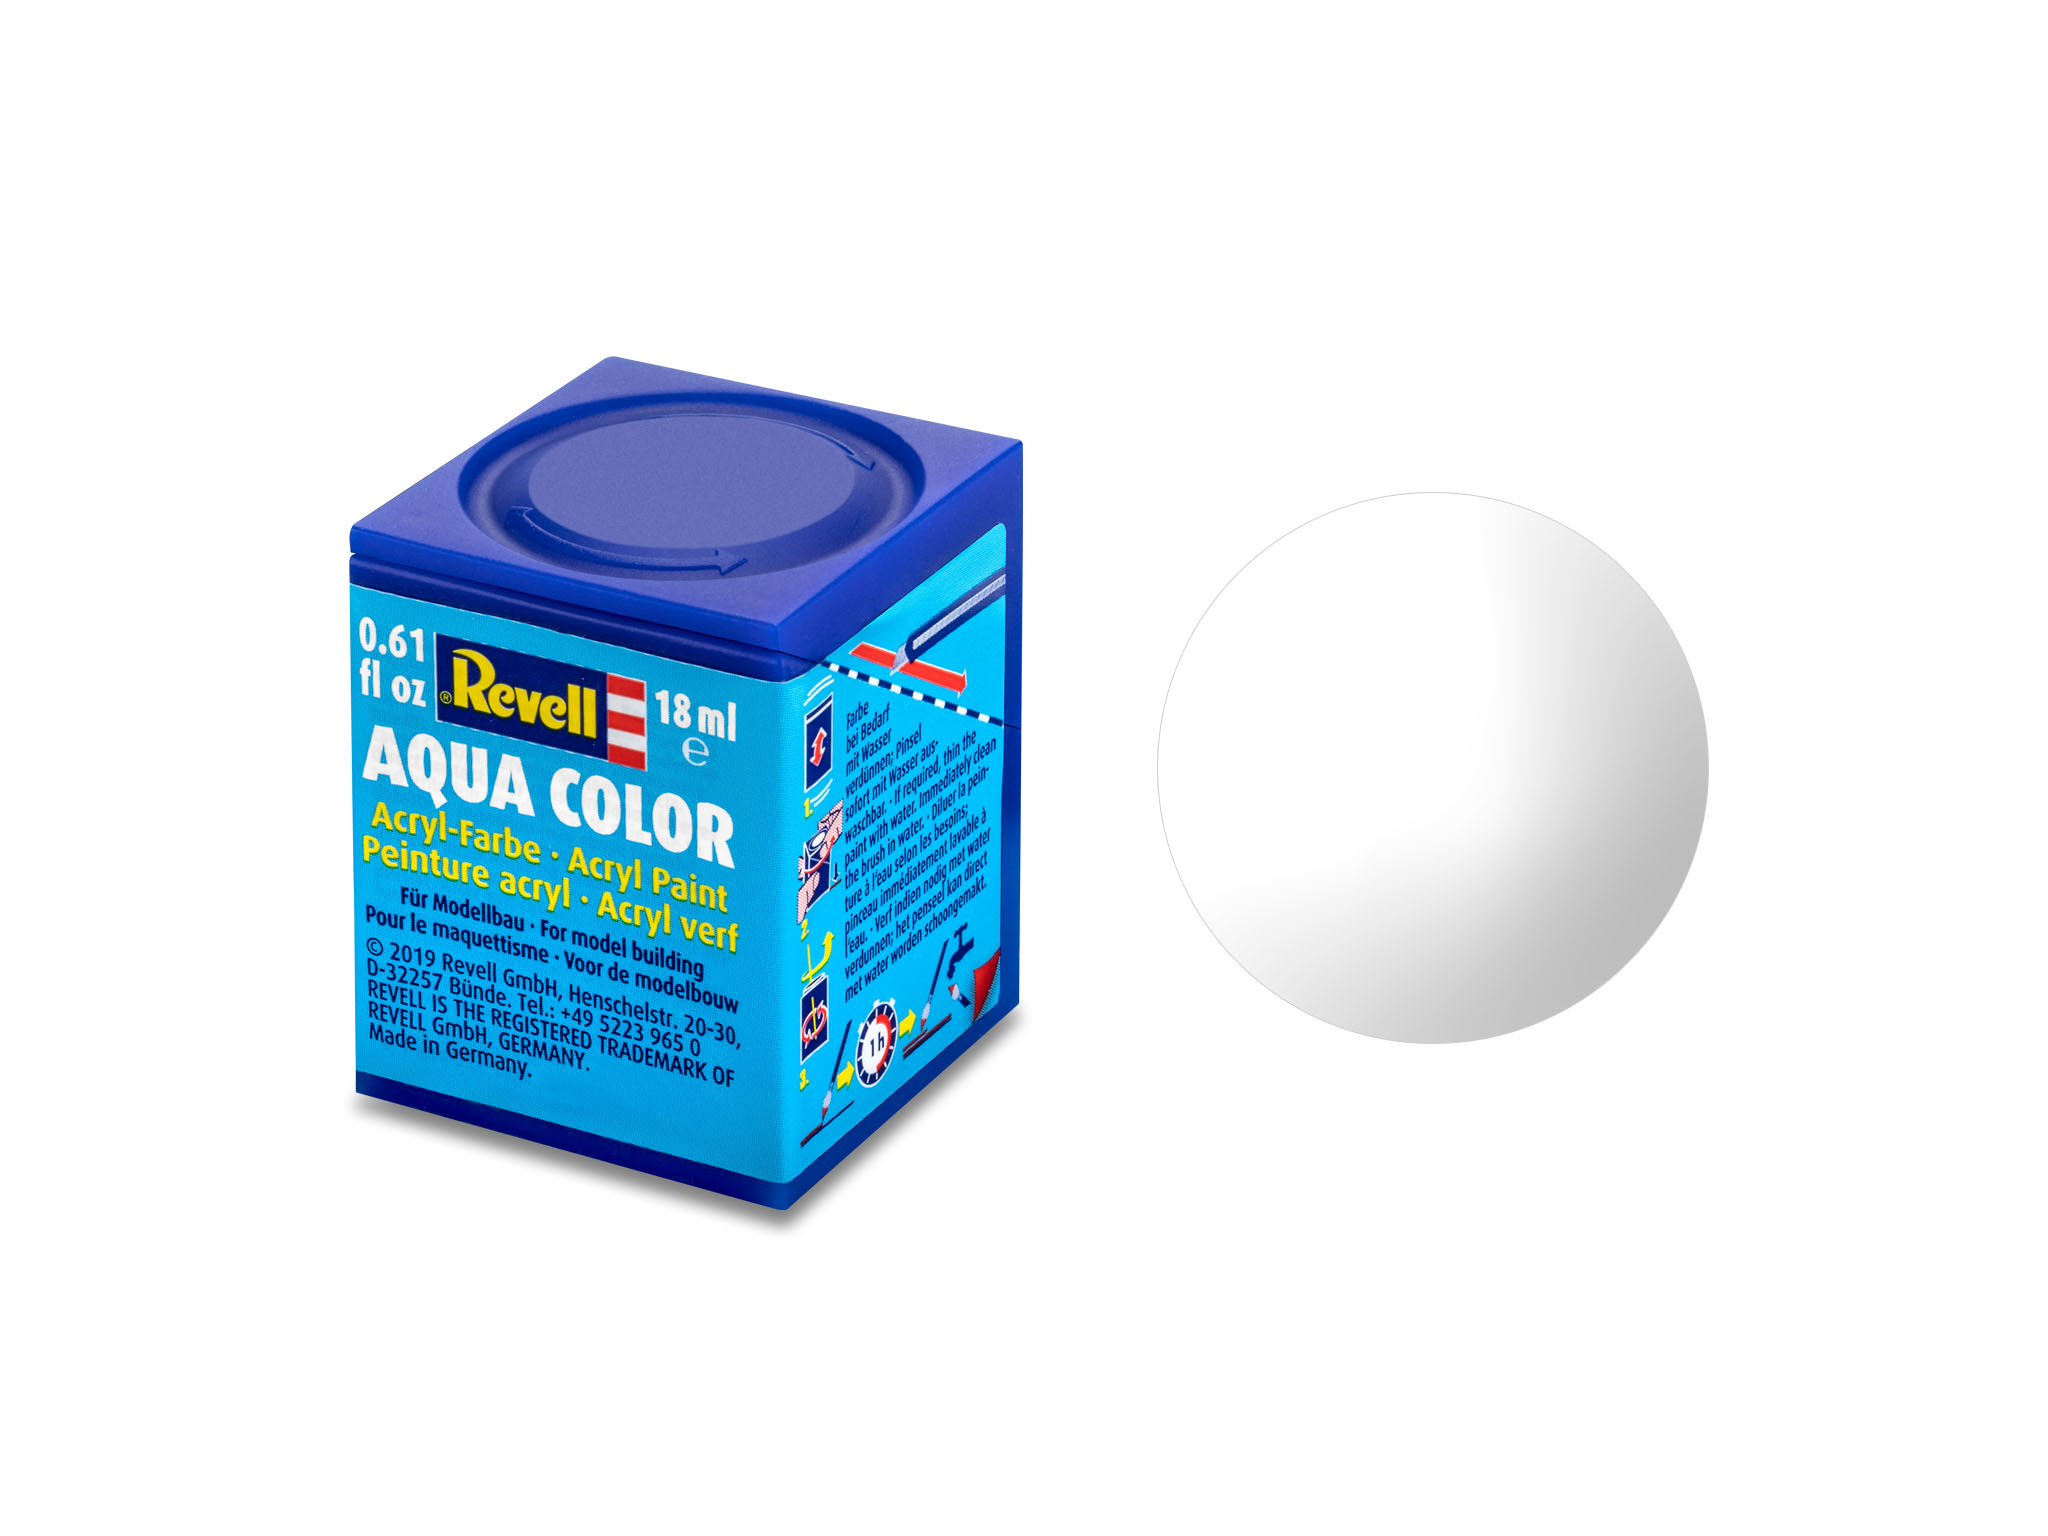 Aqua farblos, glänzend - 36101